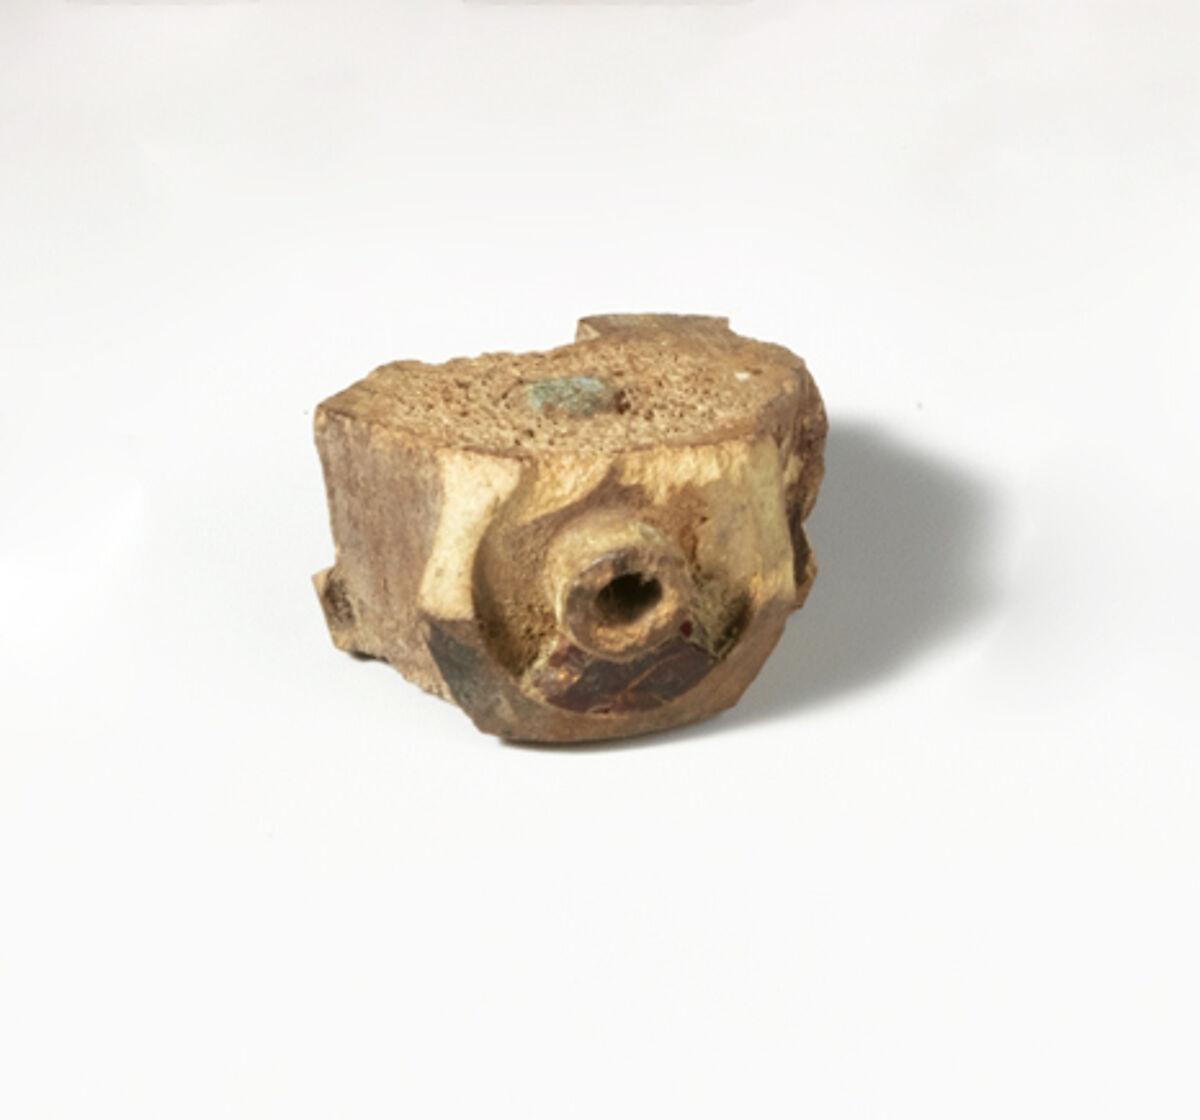 Bone and amber segment from a fibula (safety pin), Amber, bronze, bone or ivory, Etruscan 